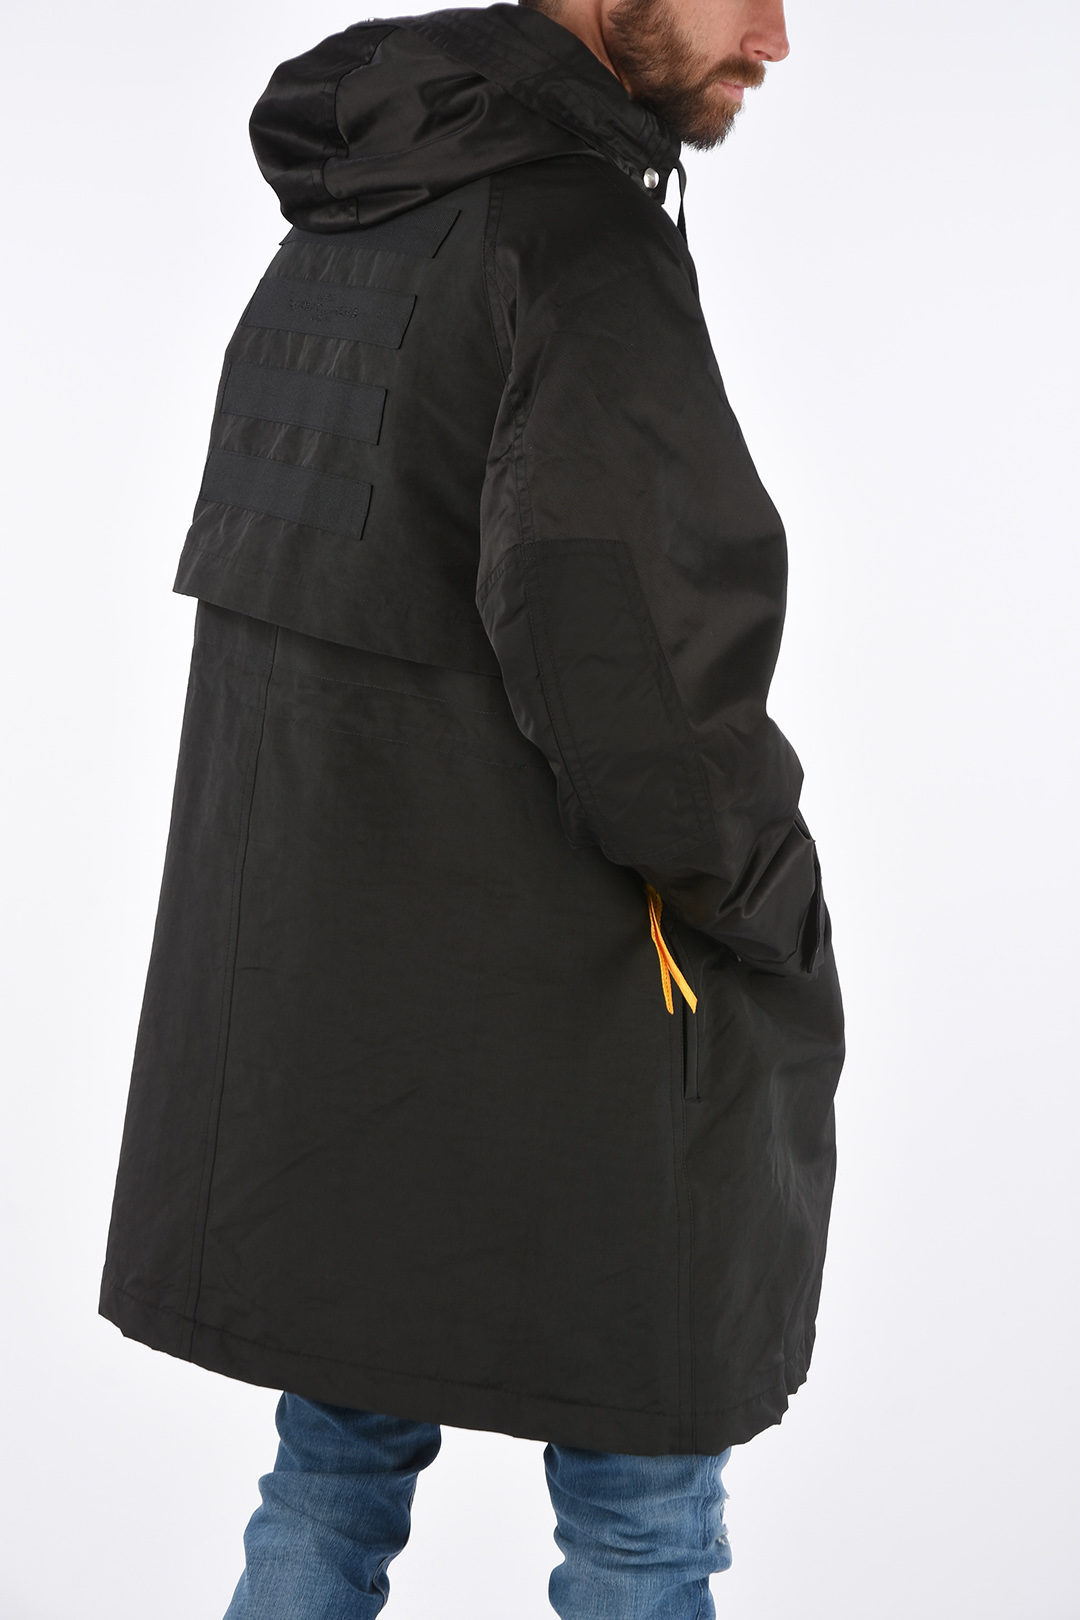 hidden closure Oversize J-RYO COAT Jacket